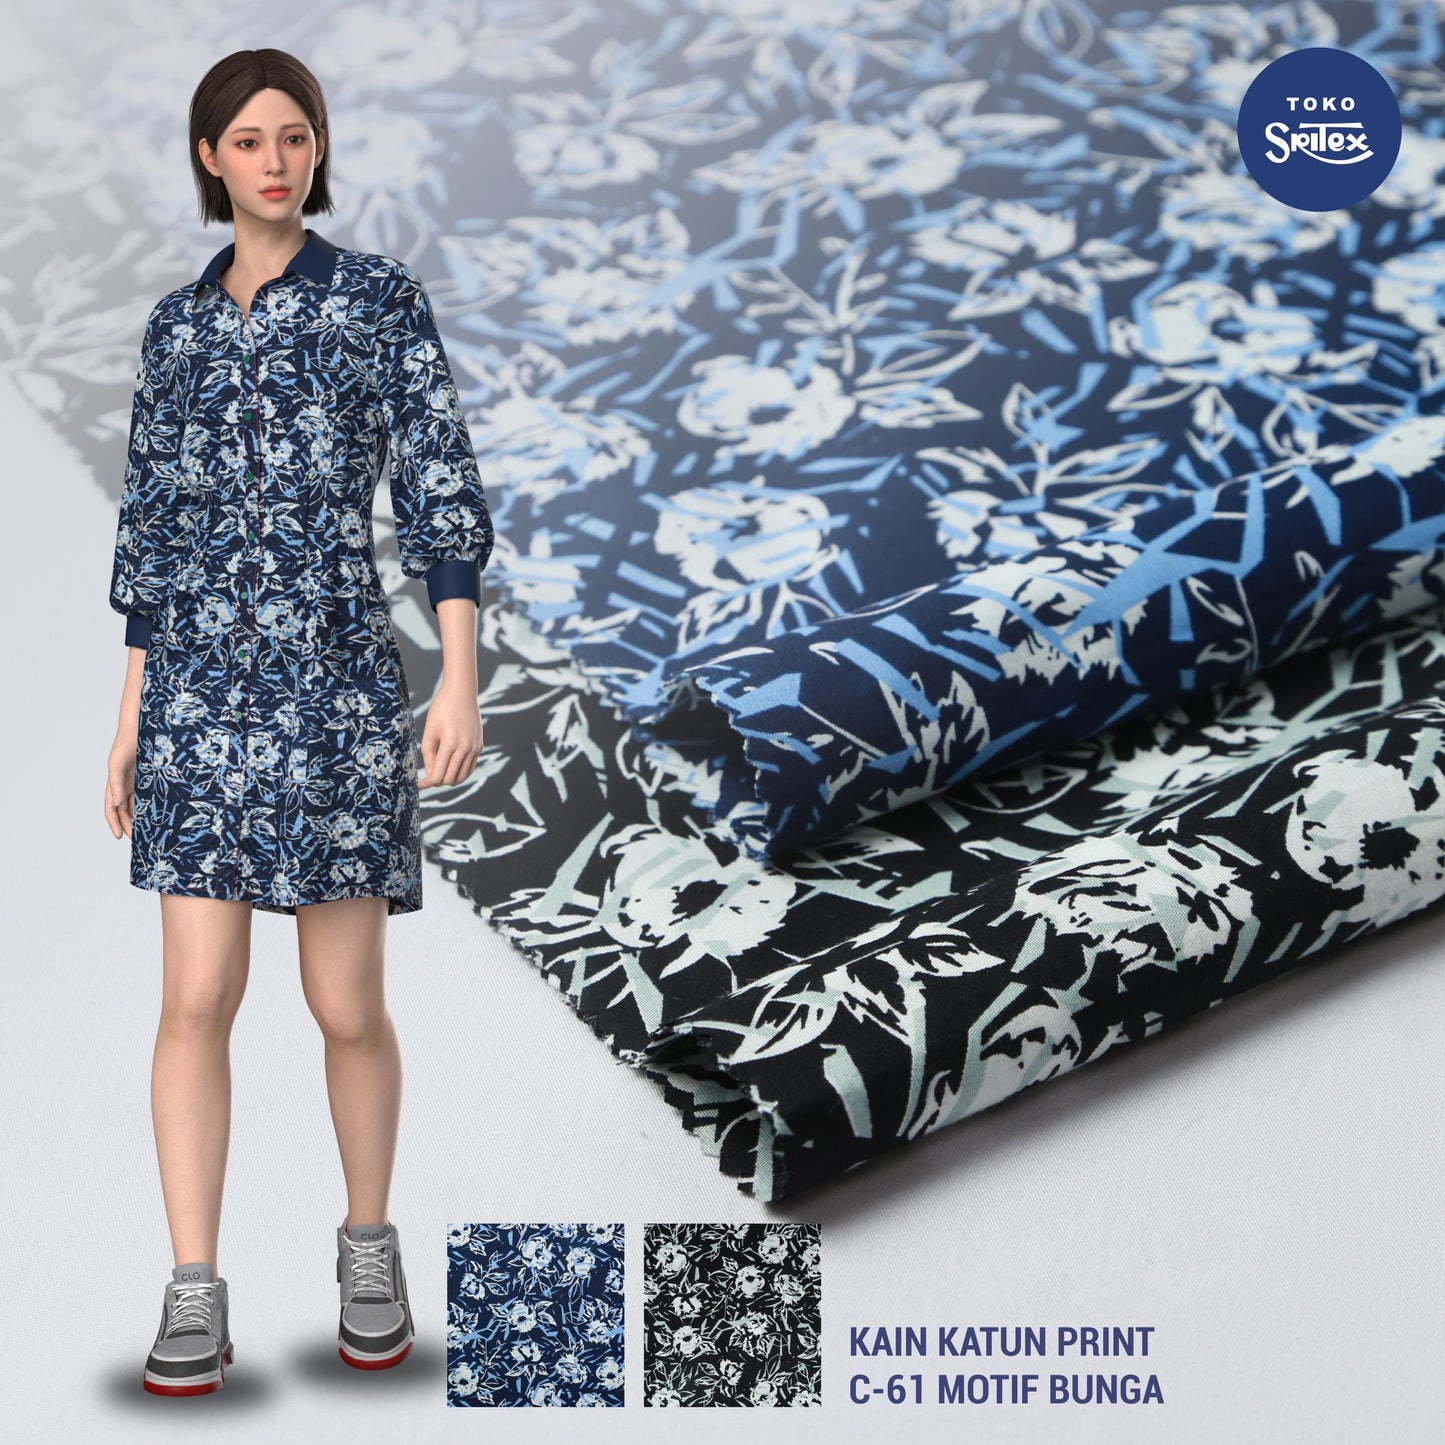 Toko Sritex Kain Katun Print Sketsa Mawar Premium Ekspor, C61. Harga per 45cm, Lebar 150cm.